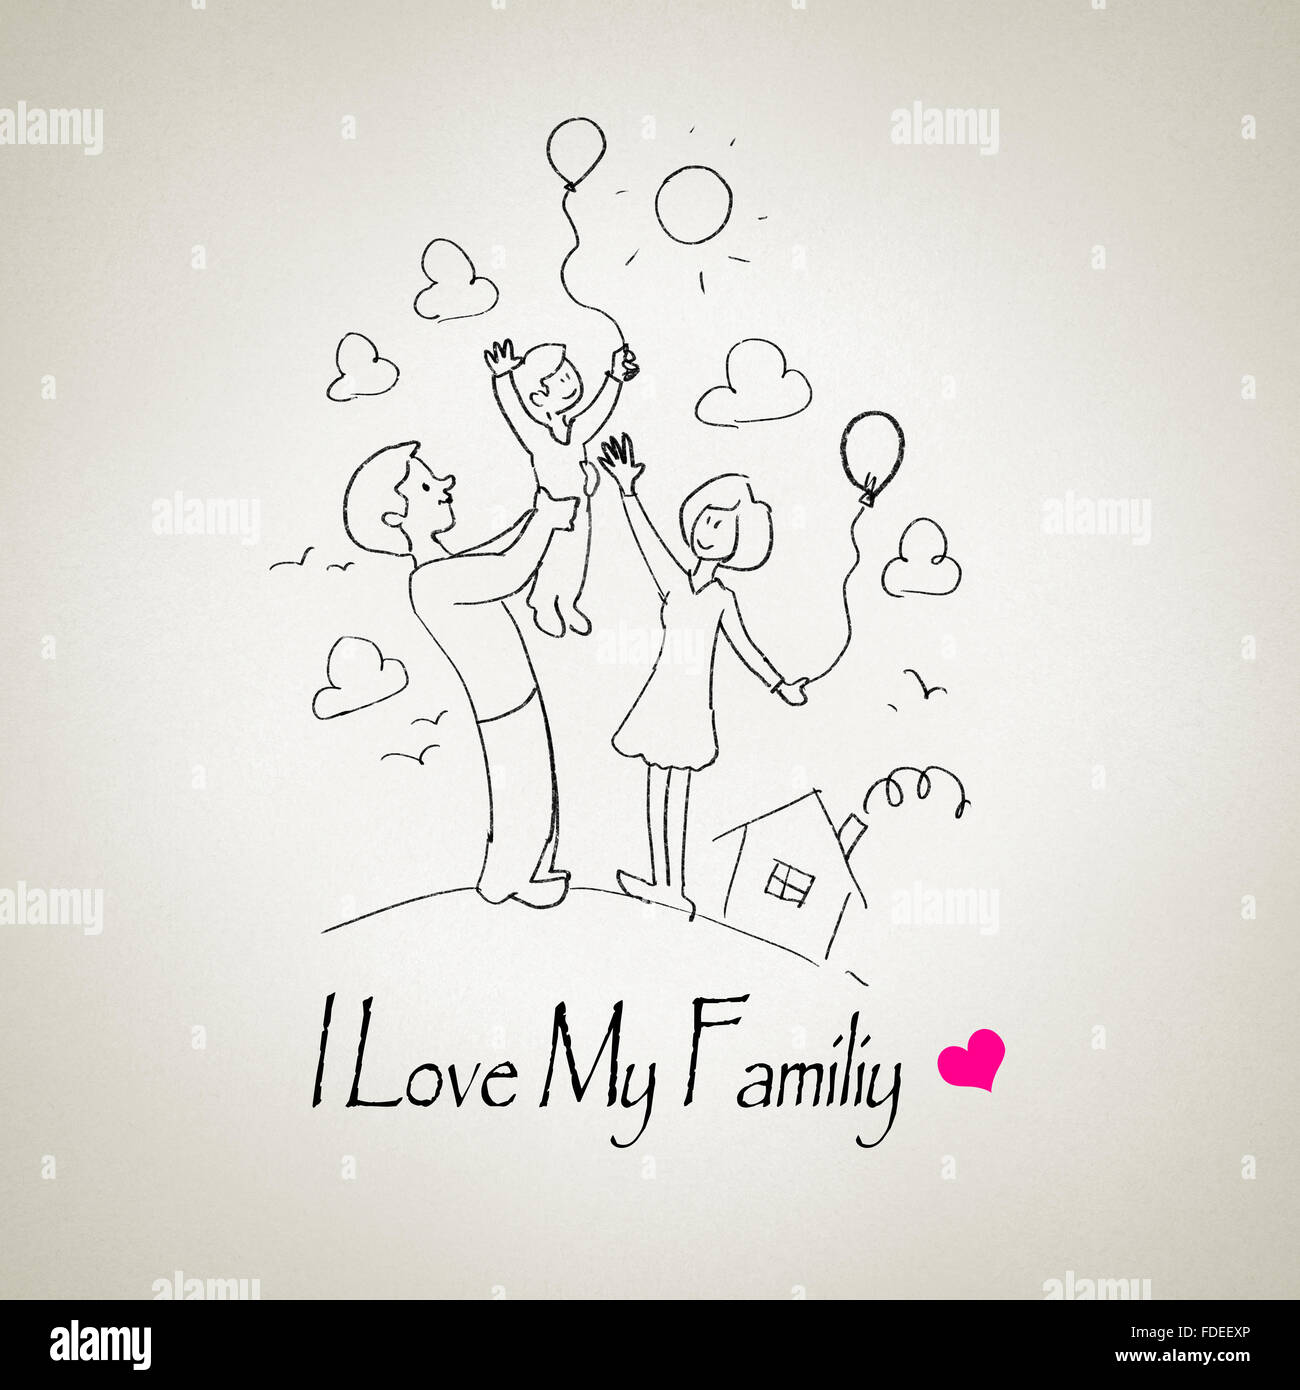 53600 Family Drawings Illustrations RoyaltyFree Vector Graphics  Clip  Art  iStock  Family illustrations